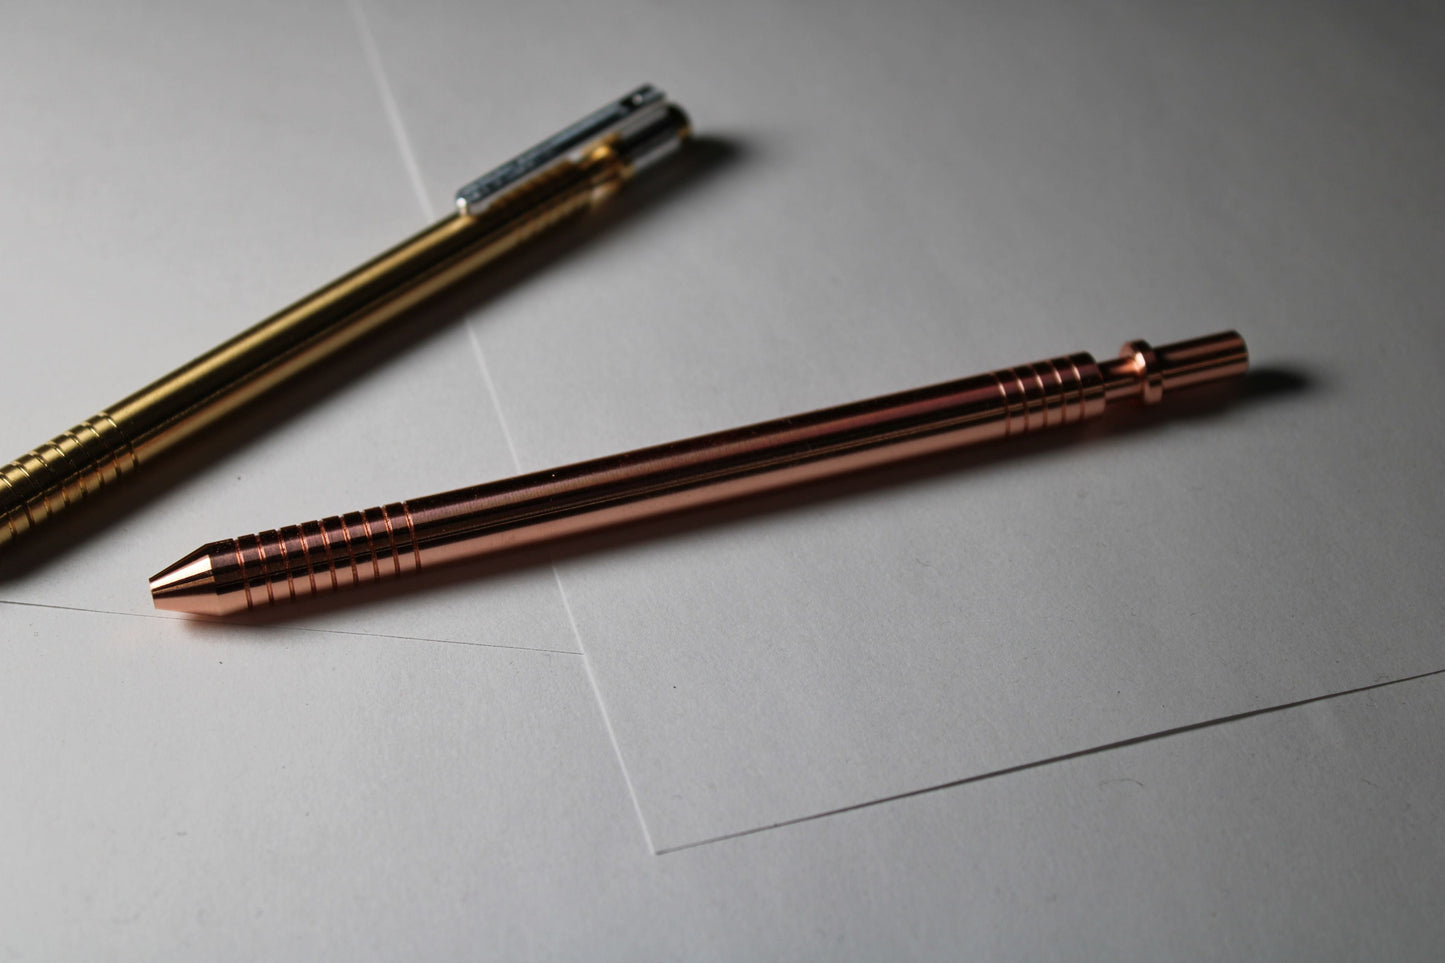 38 Twist Action - 110 Copper - Pentel Energel 0.5mm Needle Nose